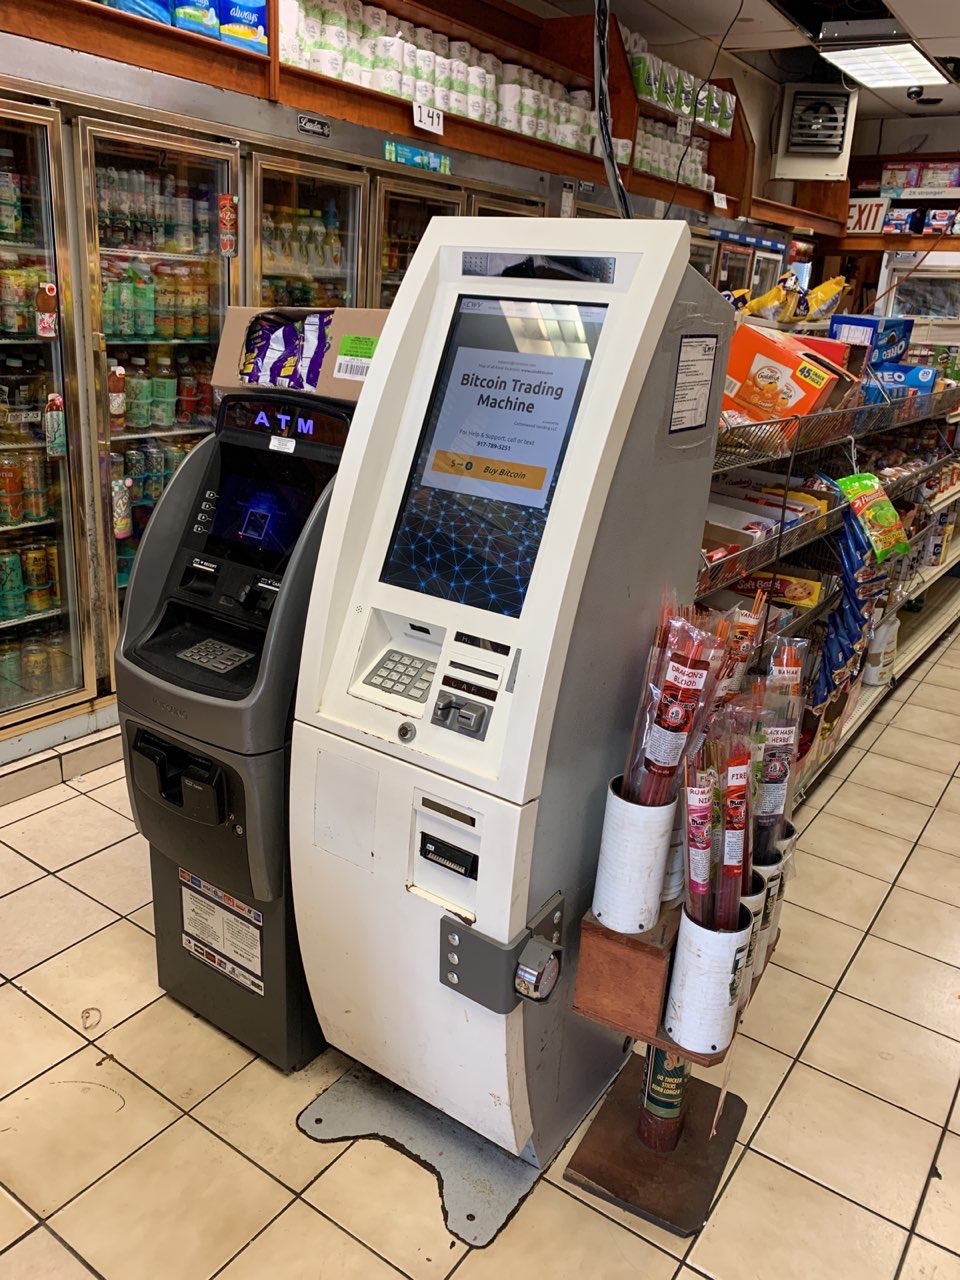 Bitcoin ATM by CoinBTM | 2150 Mott Ave, Far Rockaway, NY 11691 | Phone: (917) 789-5251